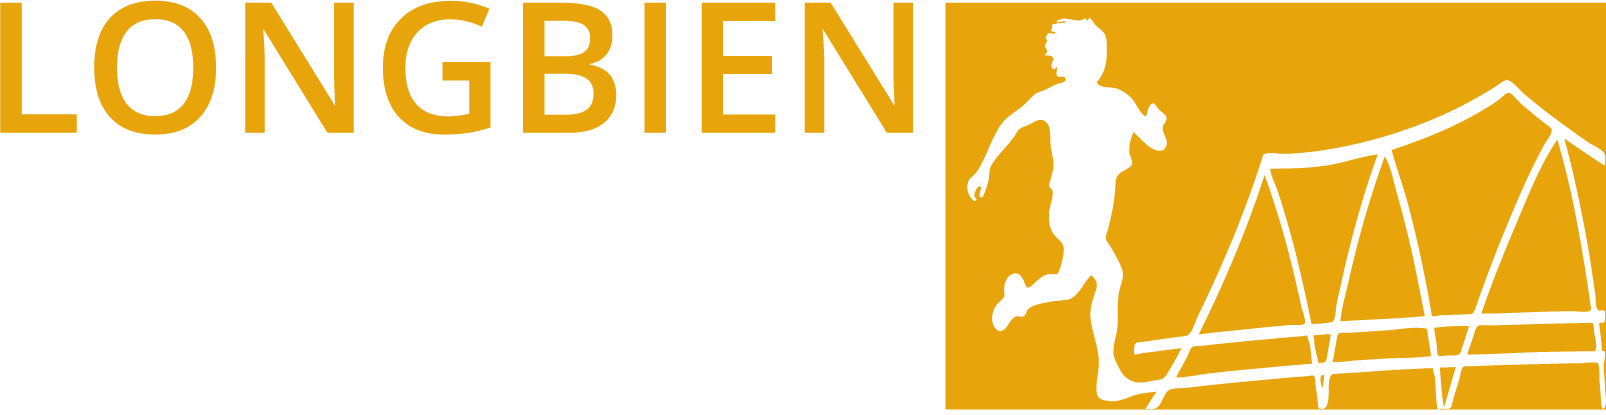 Longbien Marathon 2022